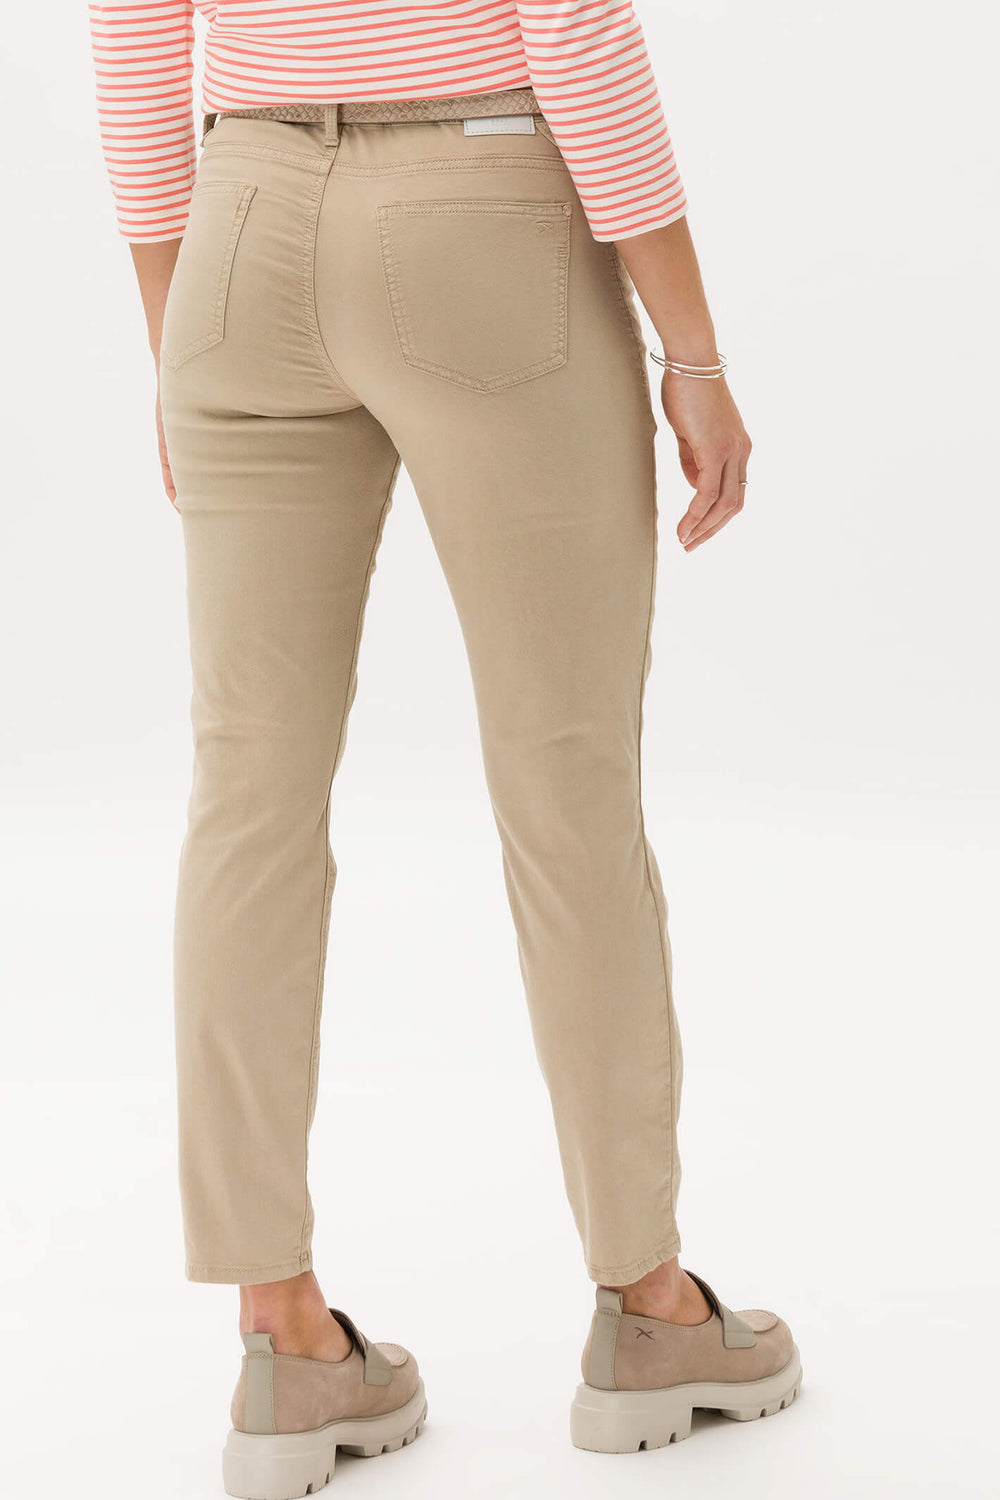 Brax Shakira S 71-7948-55 Brown Trousers - Olivia Grace Fashion